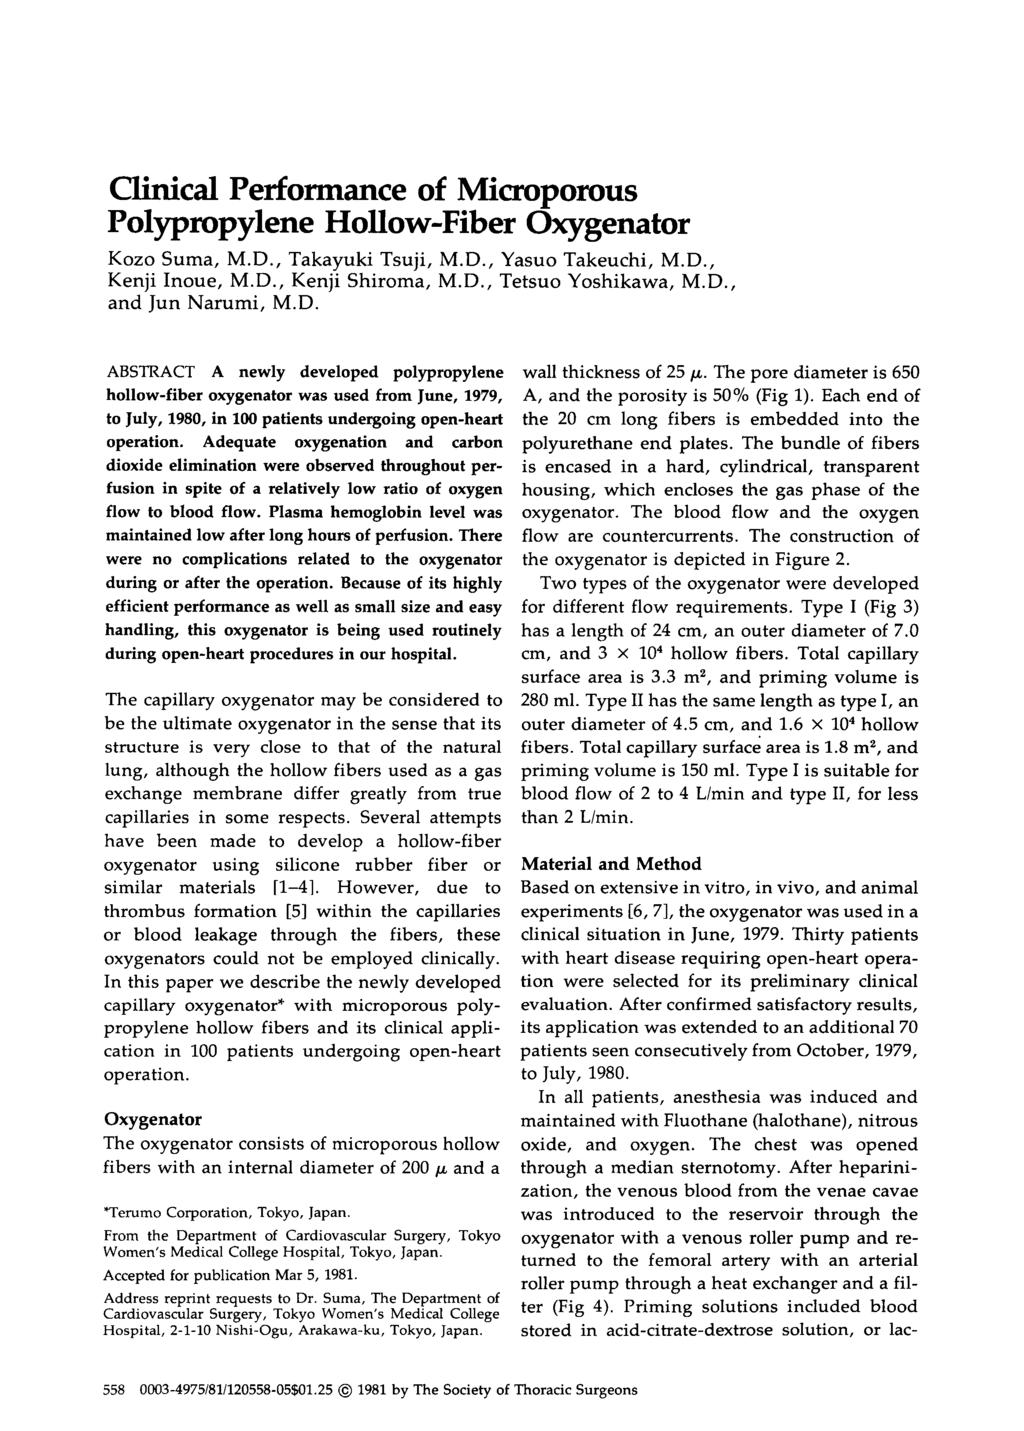 Clinical Performance of Microporous Polypropylene Hollow-Fiber Oxygenator Kozo Suma, M.D., Takayuki Tsuji, M.D., Yasuo Takeuchi, M.D., Kenji Inoue, M.D., Kenji Shiroma, M.D., Tetsuo Yoshikawa, M.D., and Jun Narumi, M.